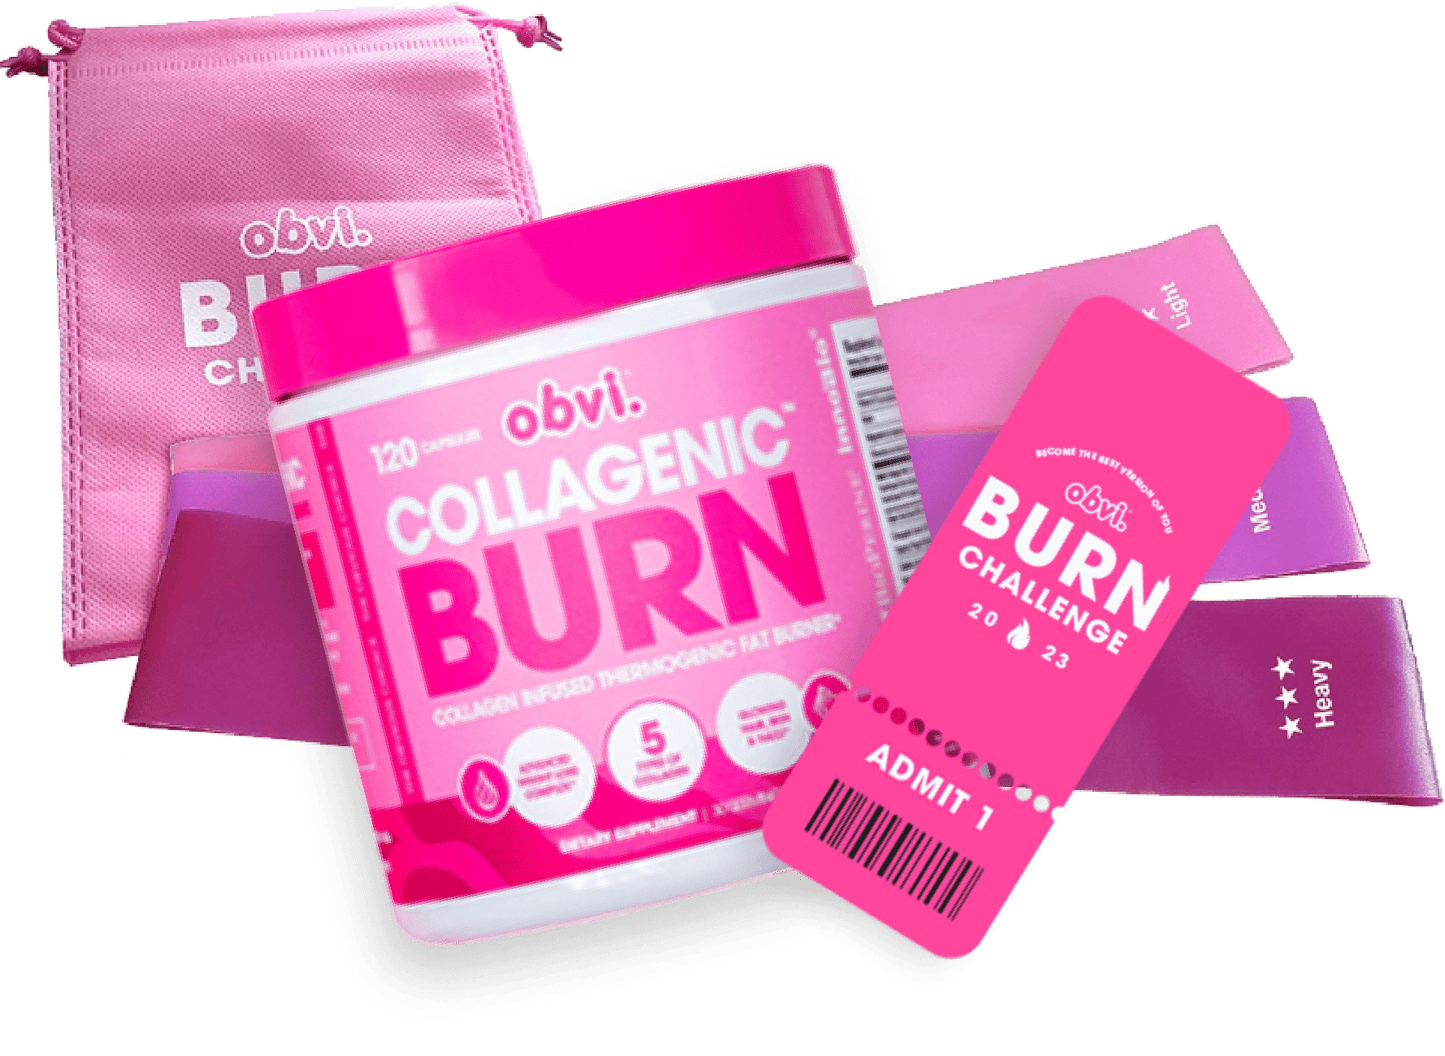 Burn Challenge | Collagenic Burn